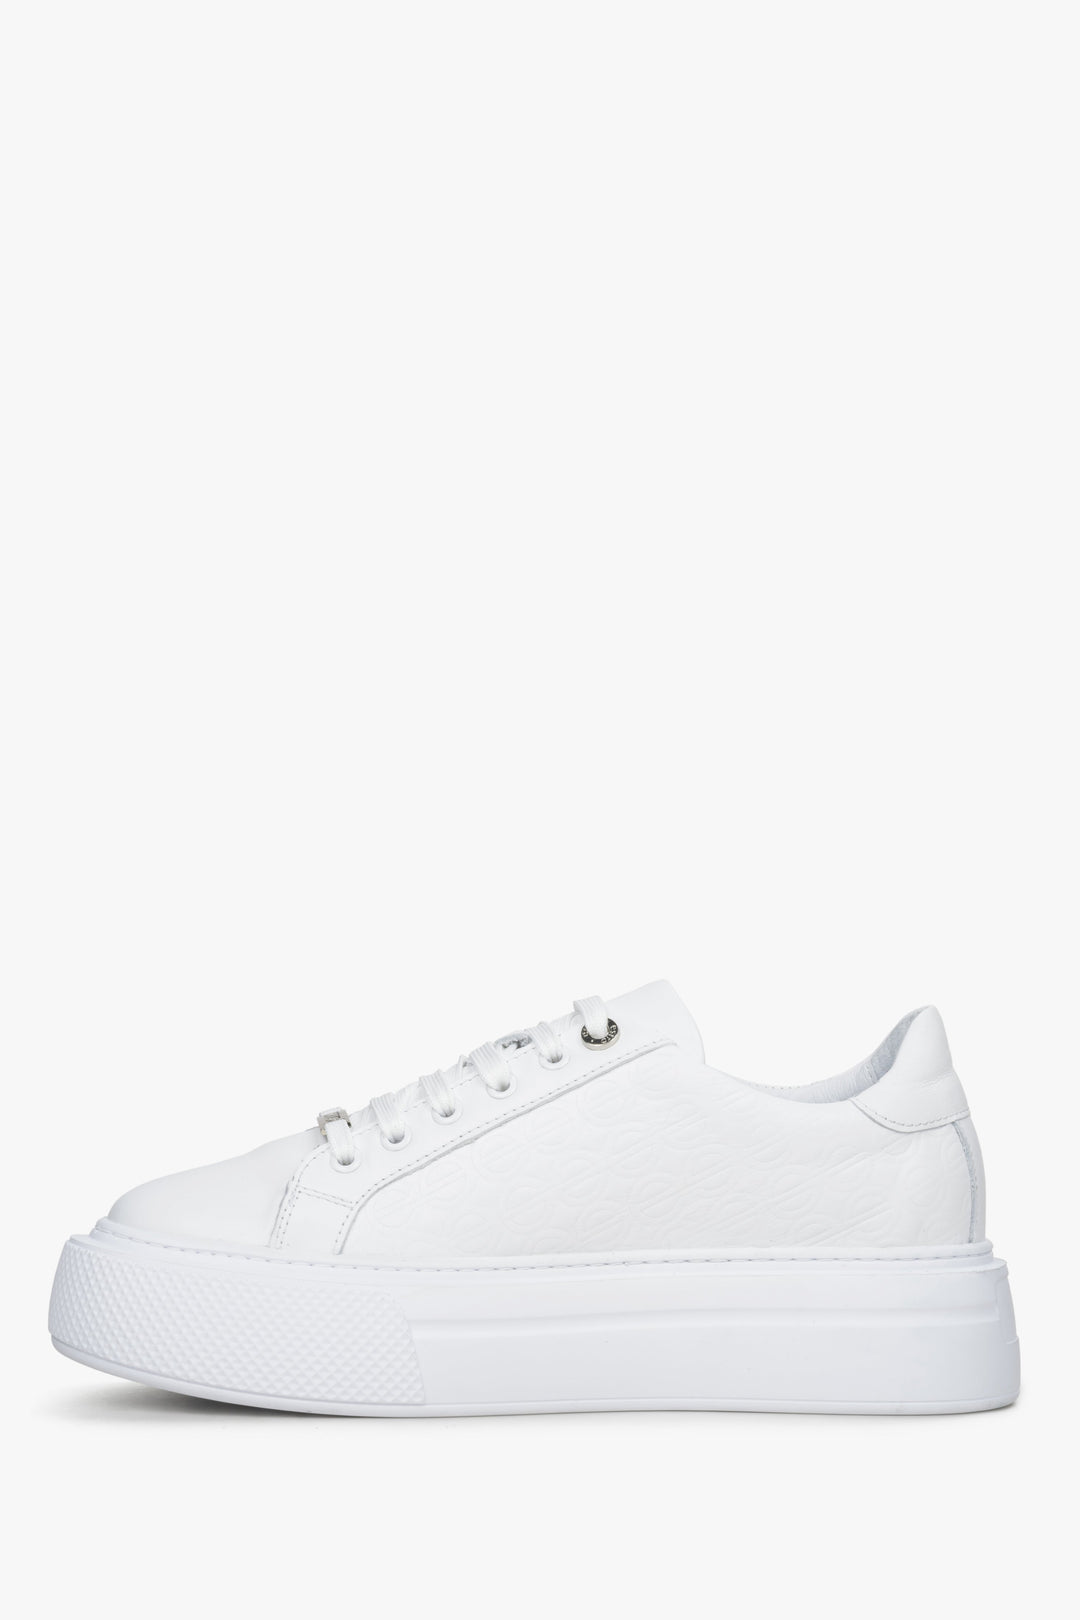 Women's white leather sneakers by Estro - shoe profile.